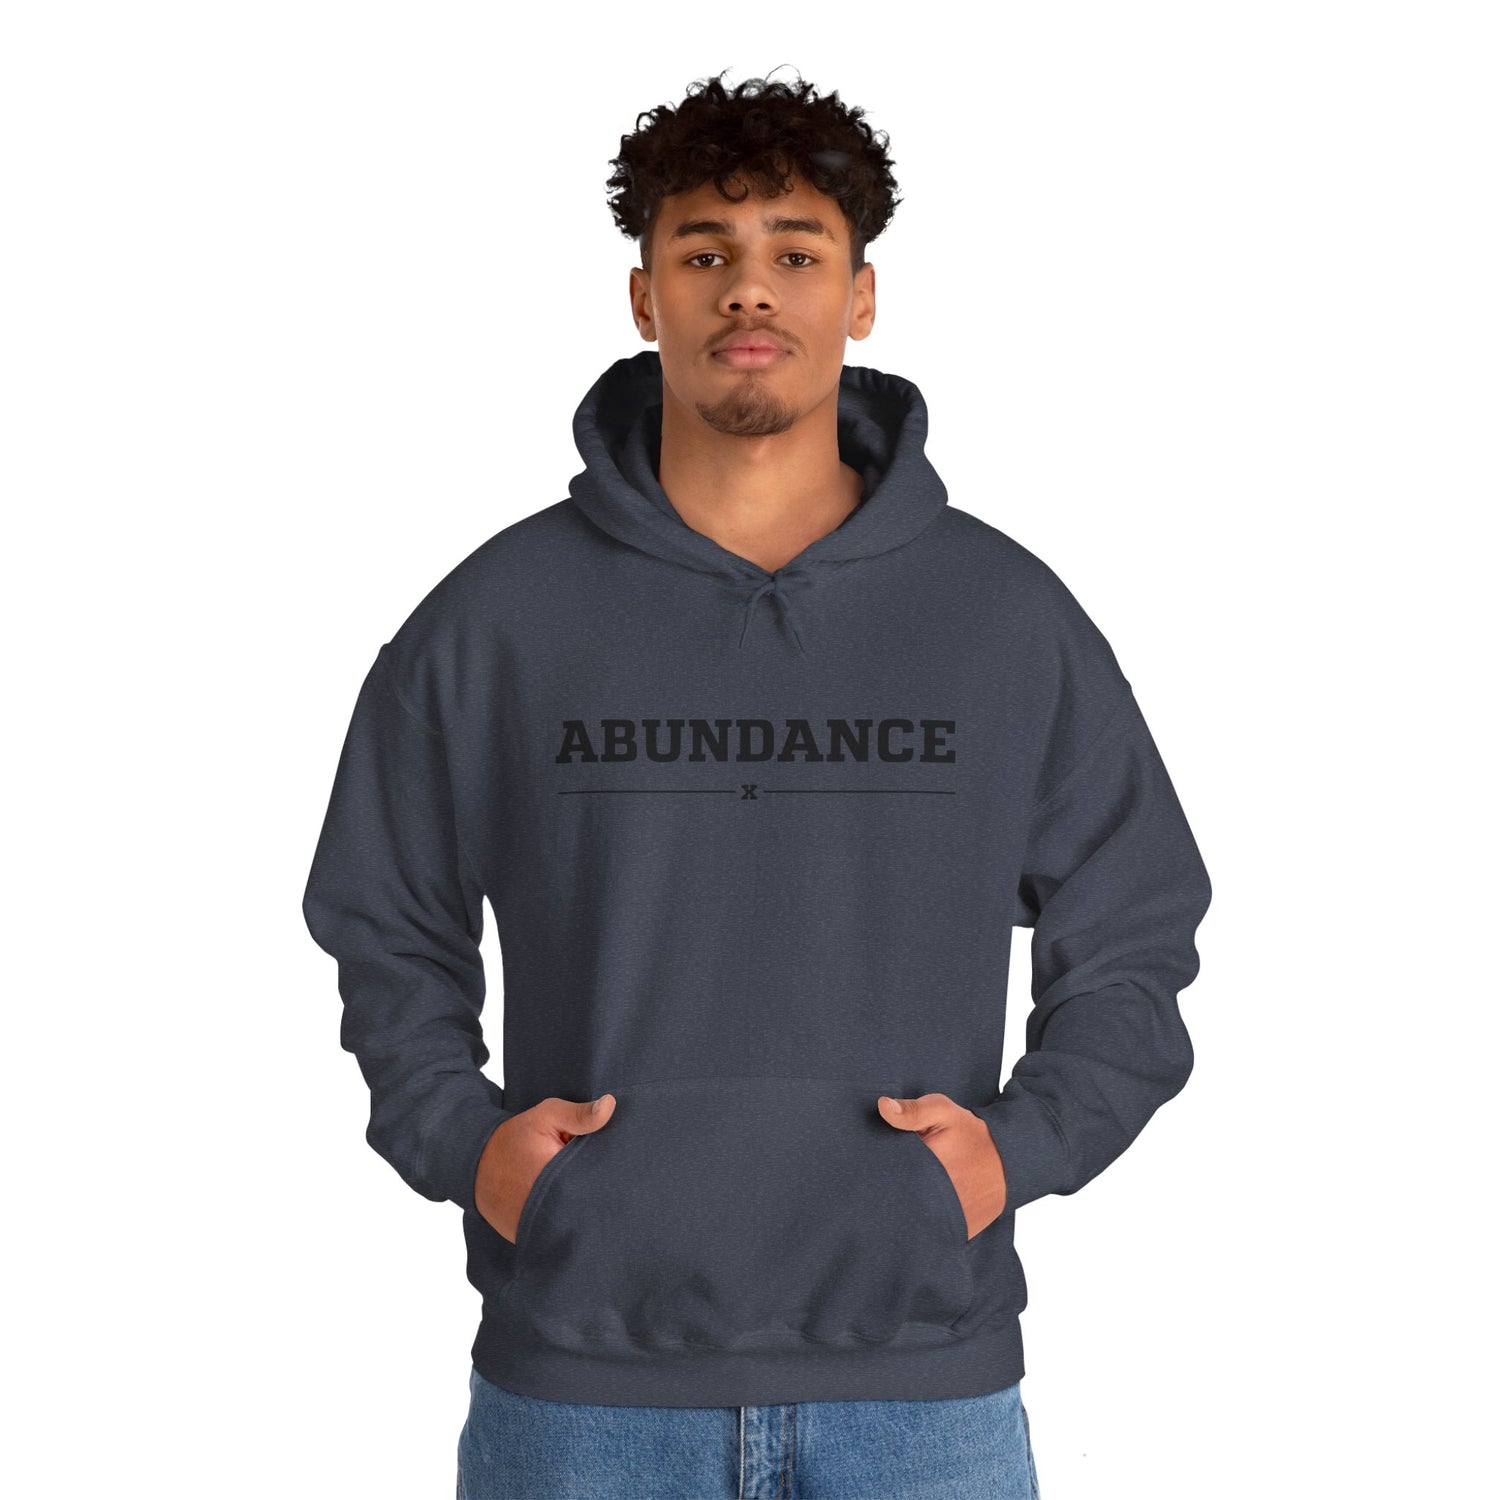 Abundance Hoodie